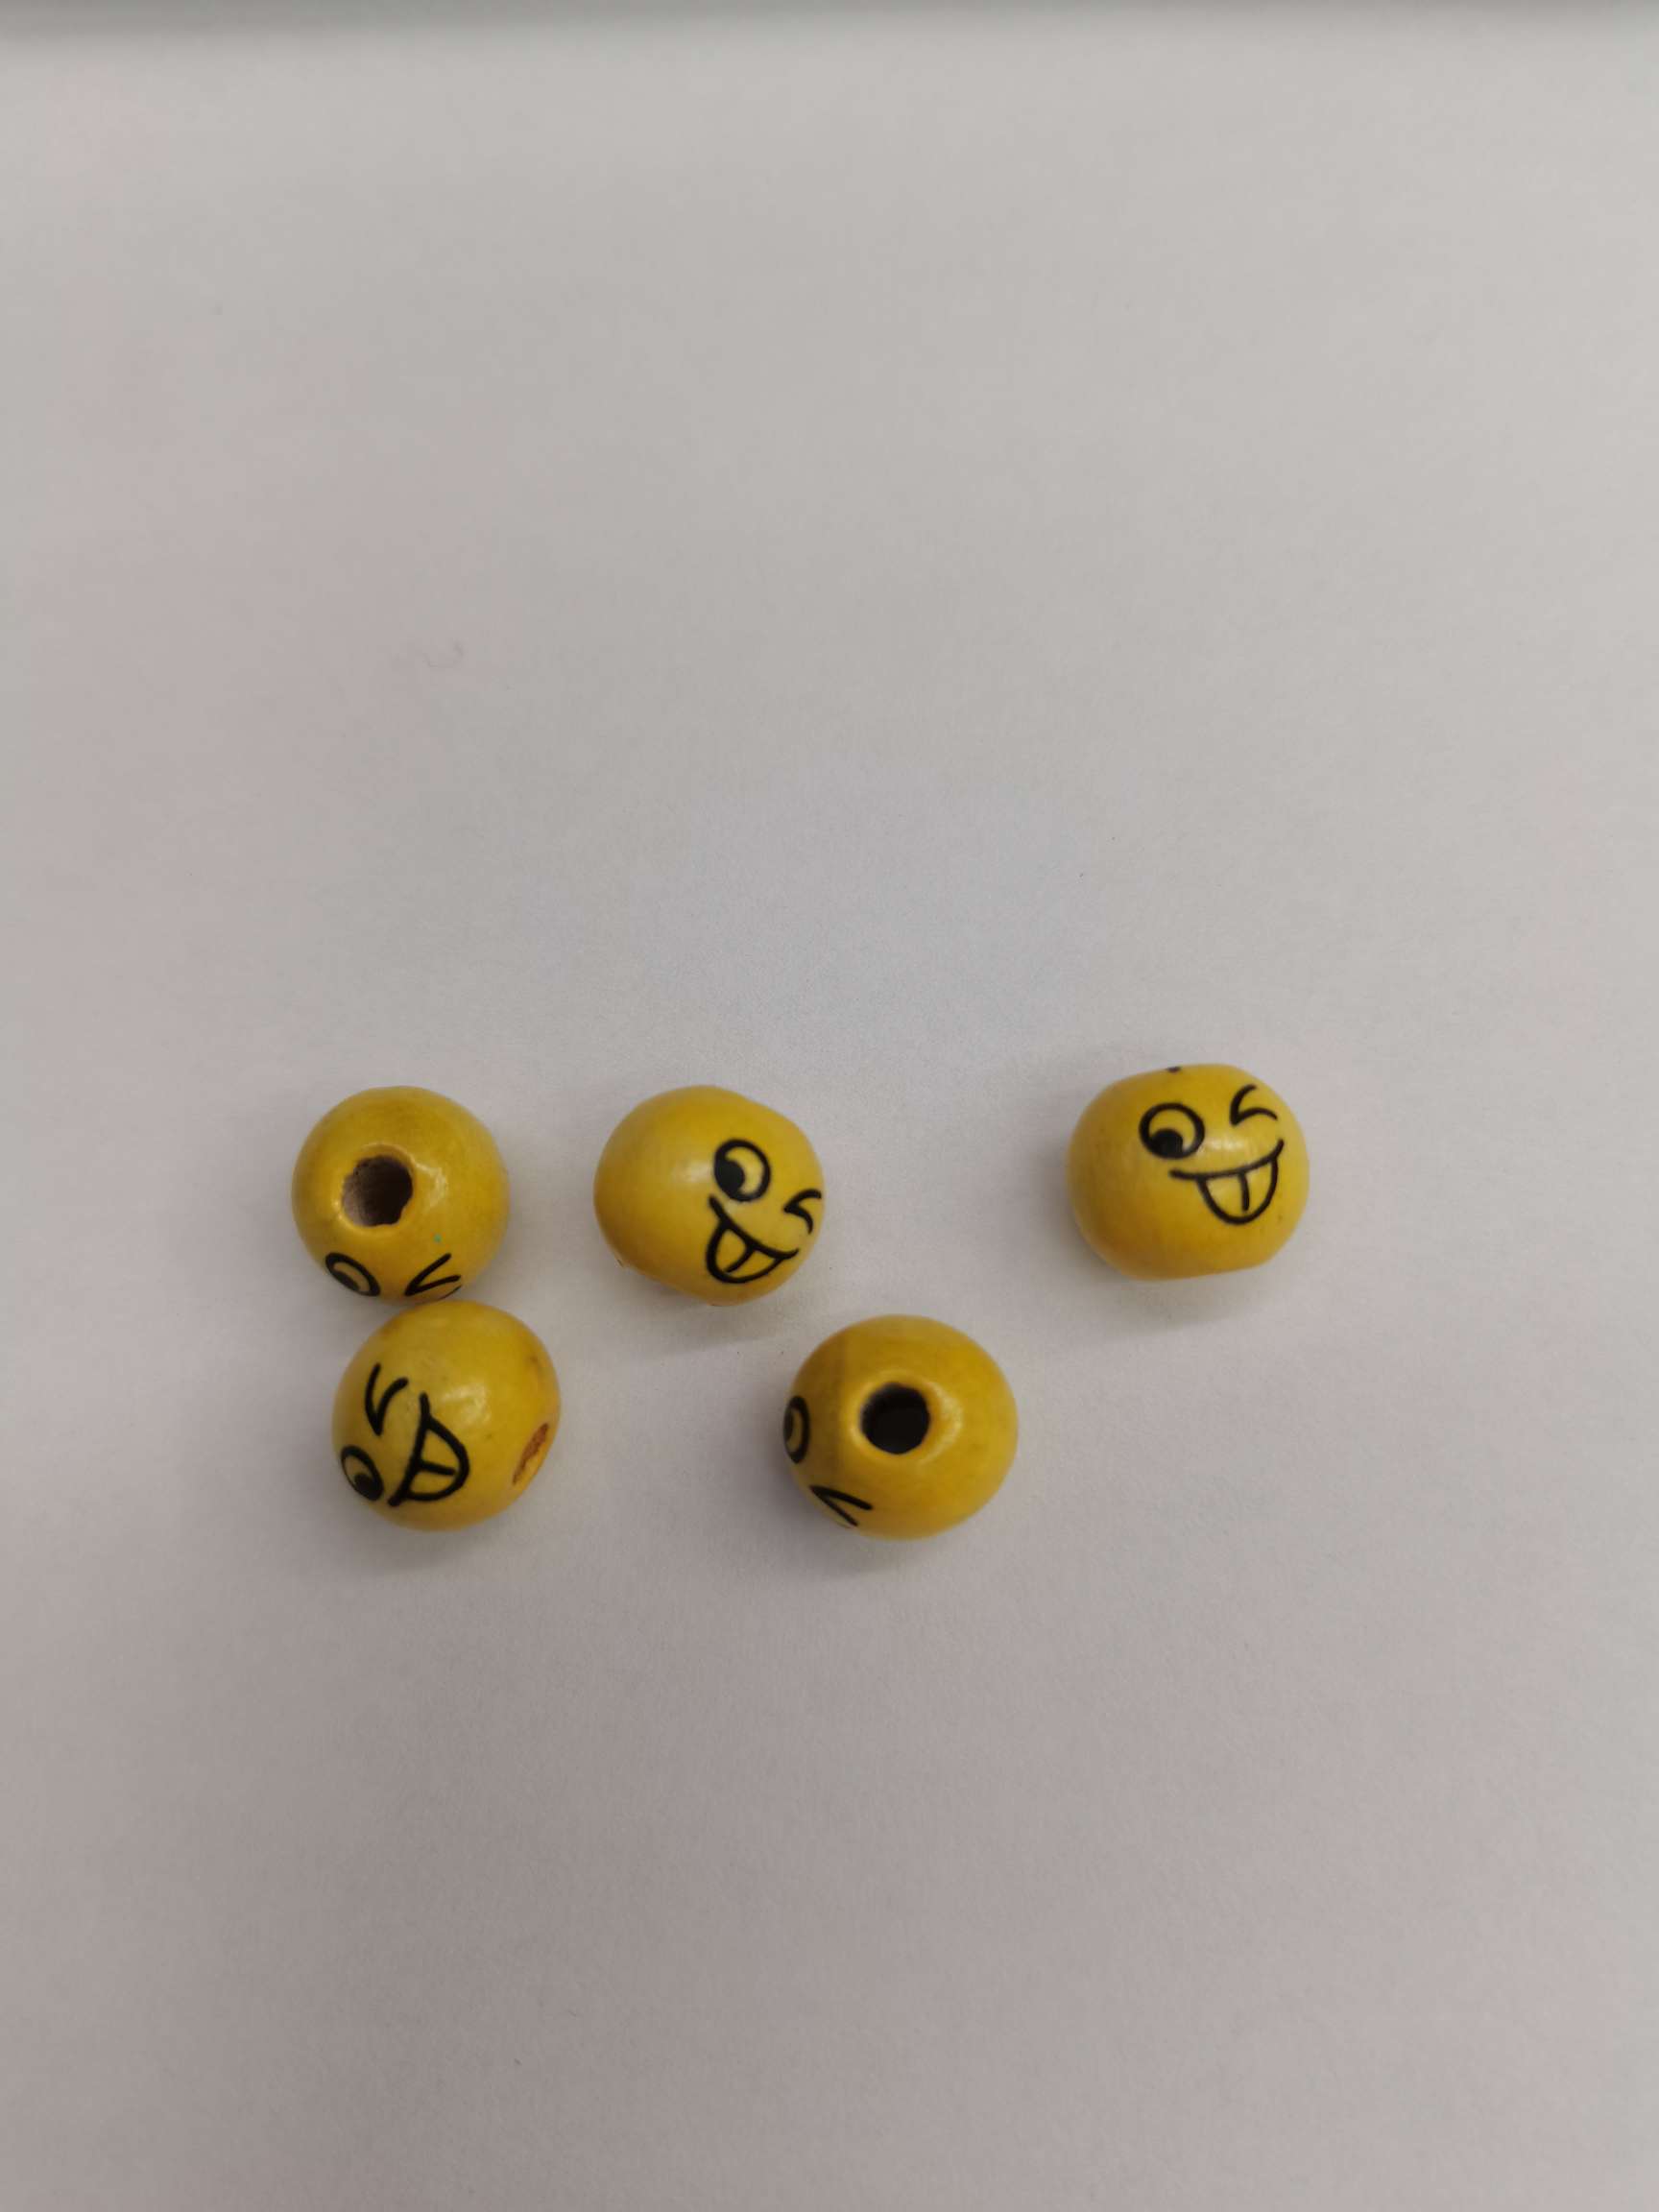 10mm木珠印刷表情脸 黄色笑脸木珠细节图